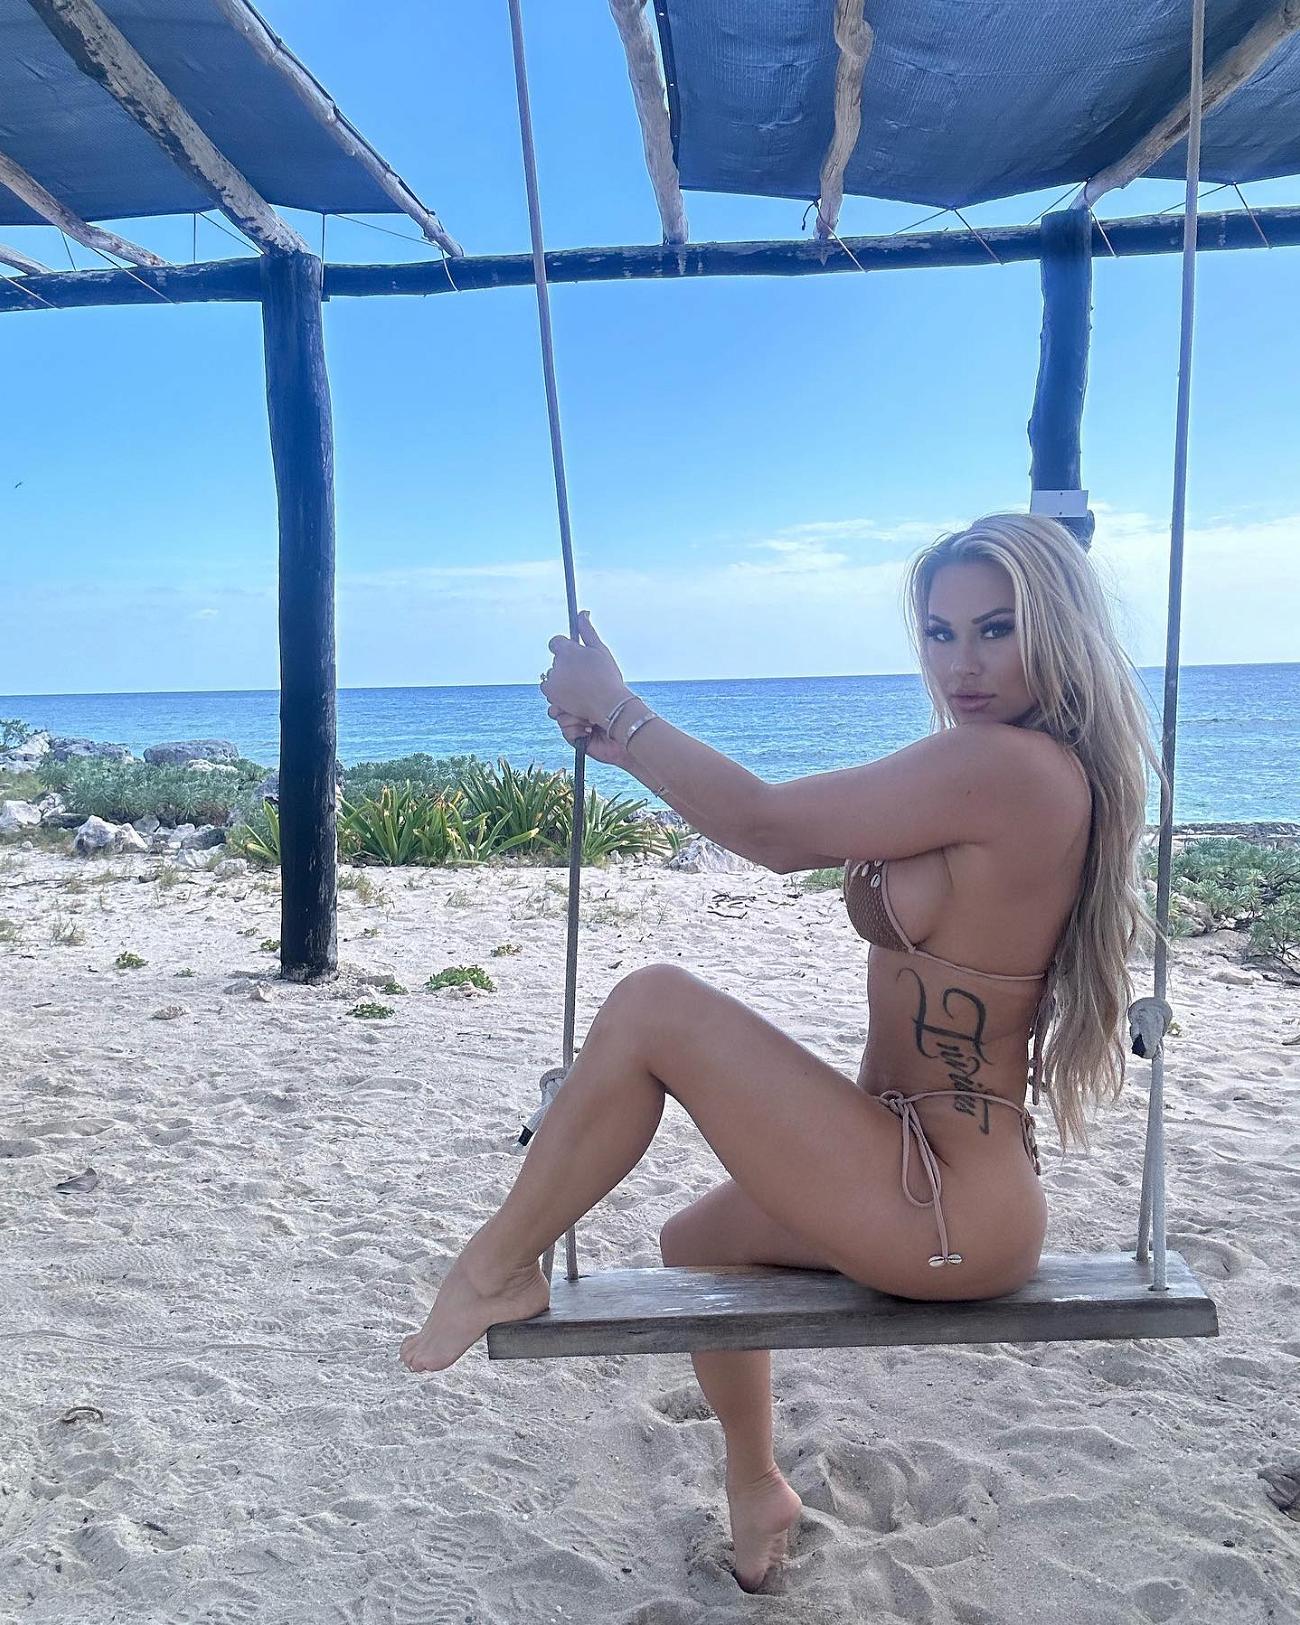 Kindly Myers on a swing in a bikini